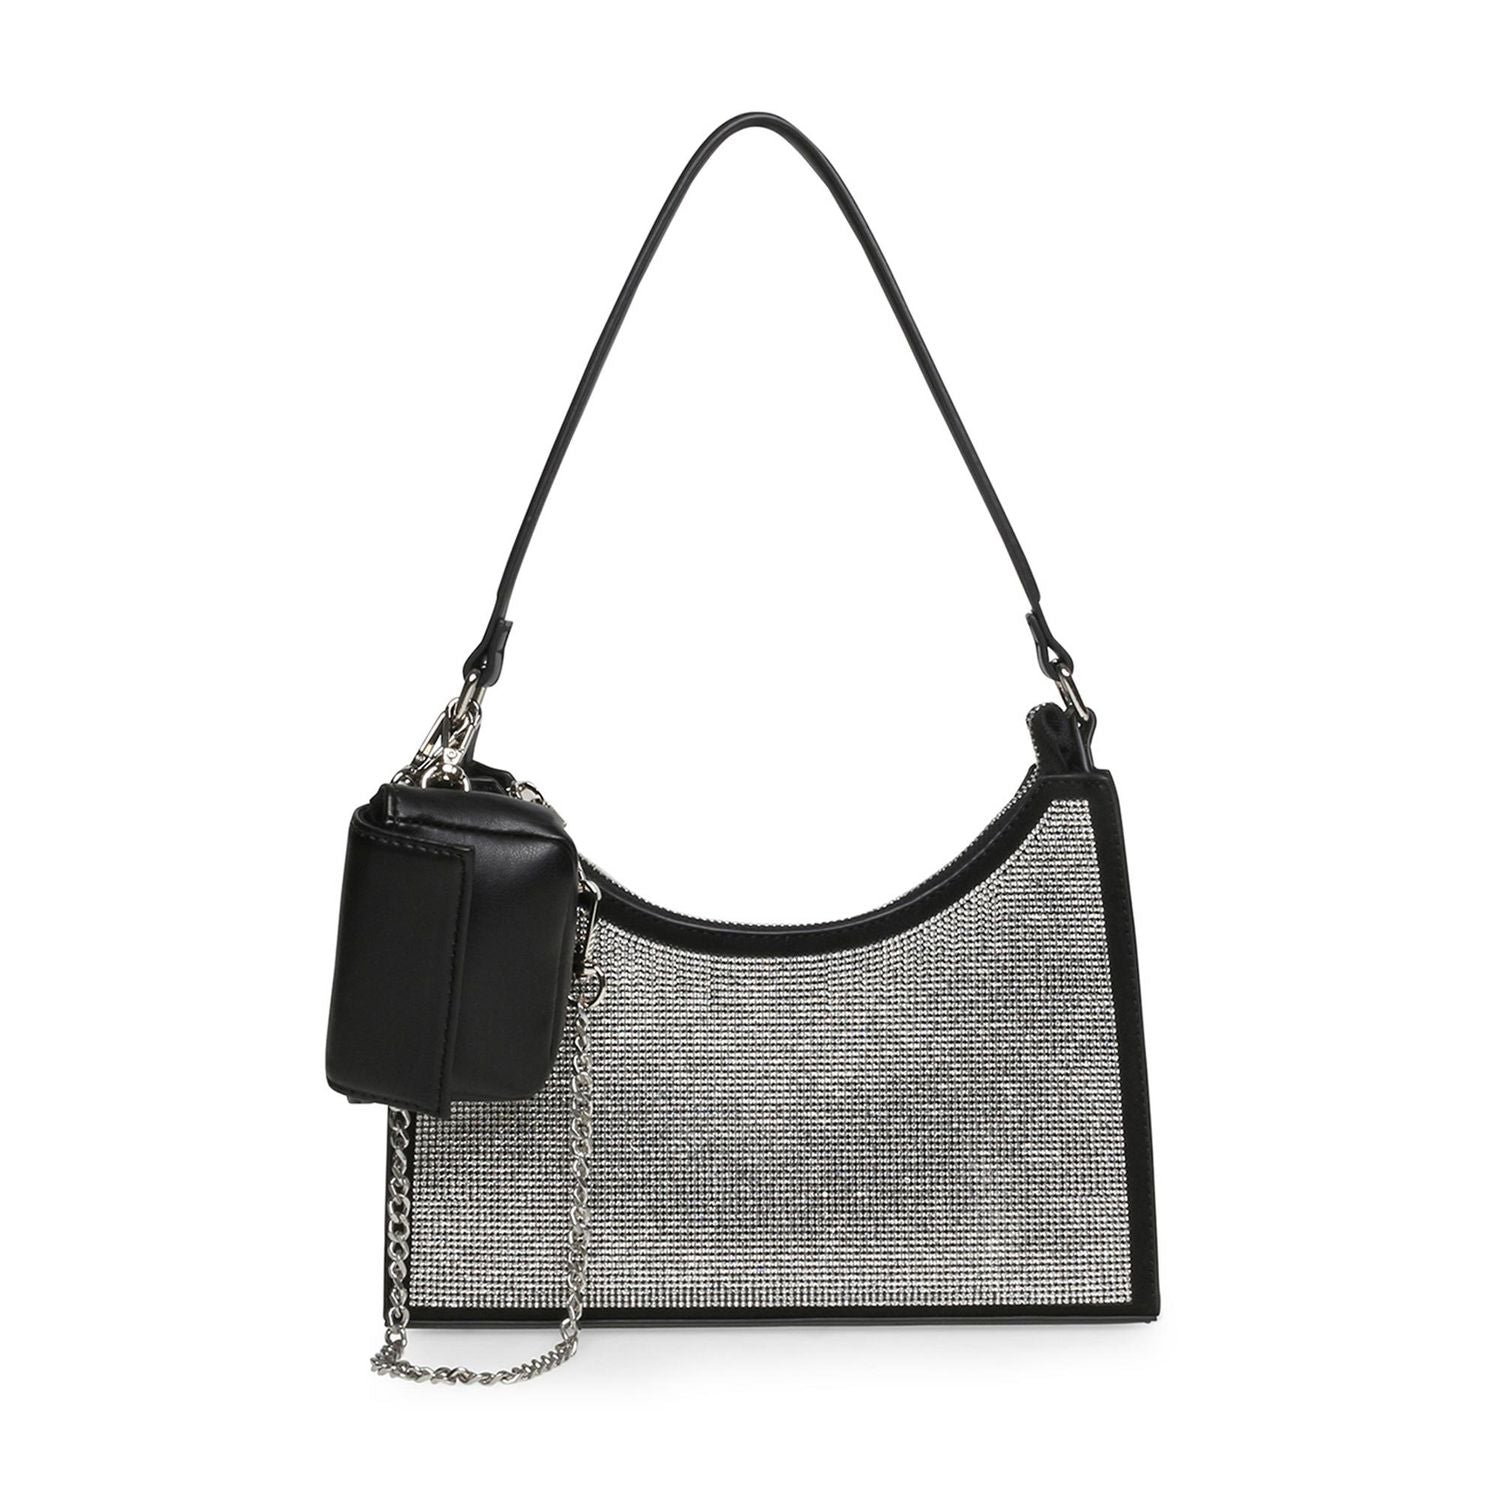 White silver Crystal Bling Rhinestone renaissance handbag purse bag New |  eBay